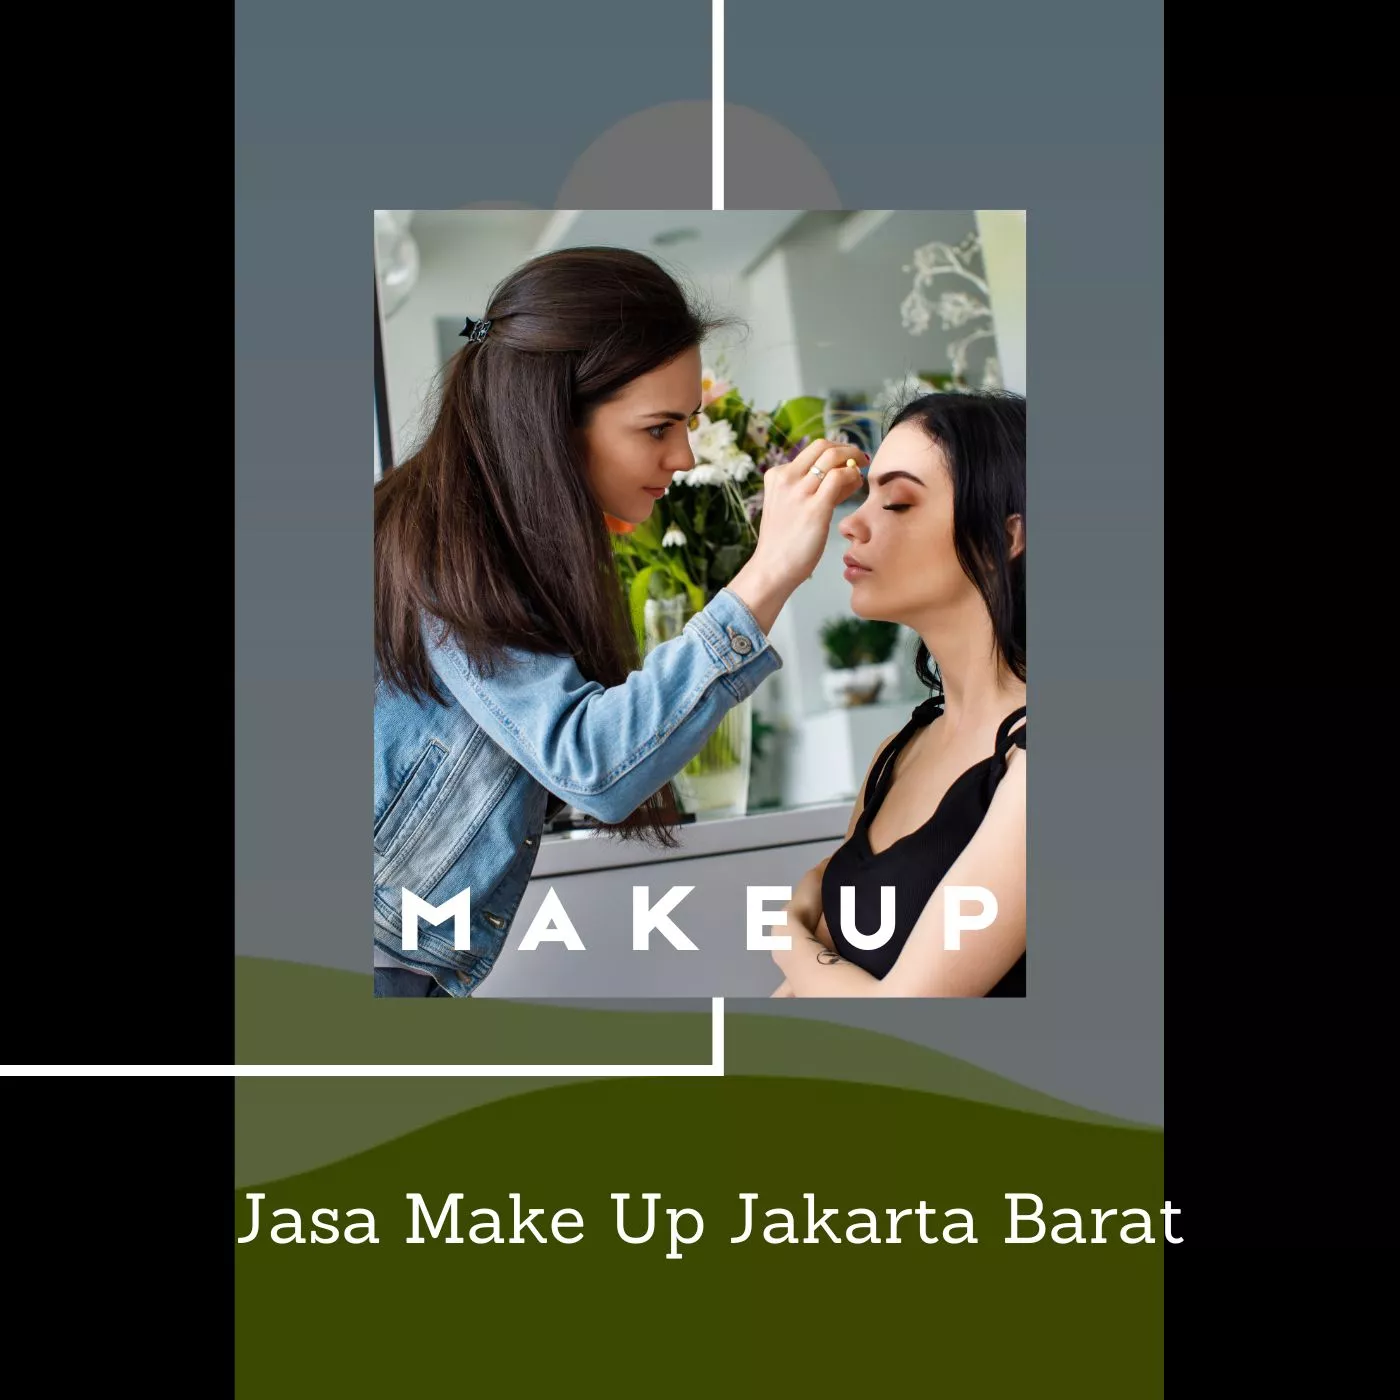 Jasa Make Up Jakarta Barat 